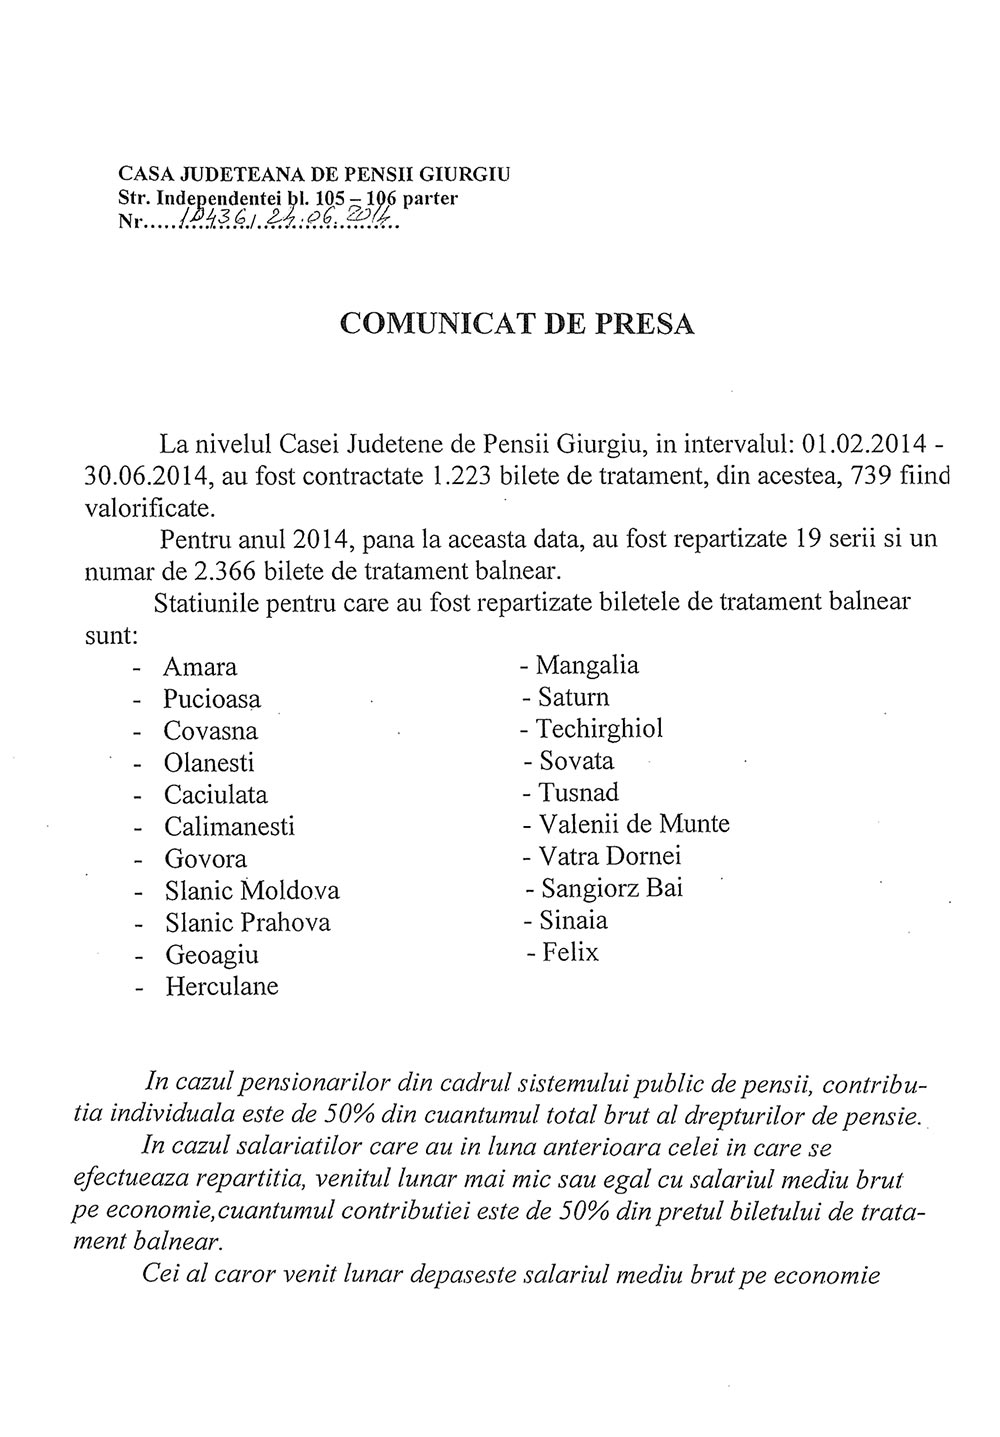 COMUNICAT DE PRESA - Repartizare bilete de tratament balnear (01.02-30.06.2014)